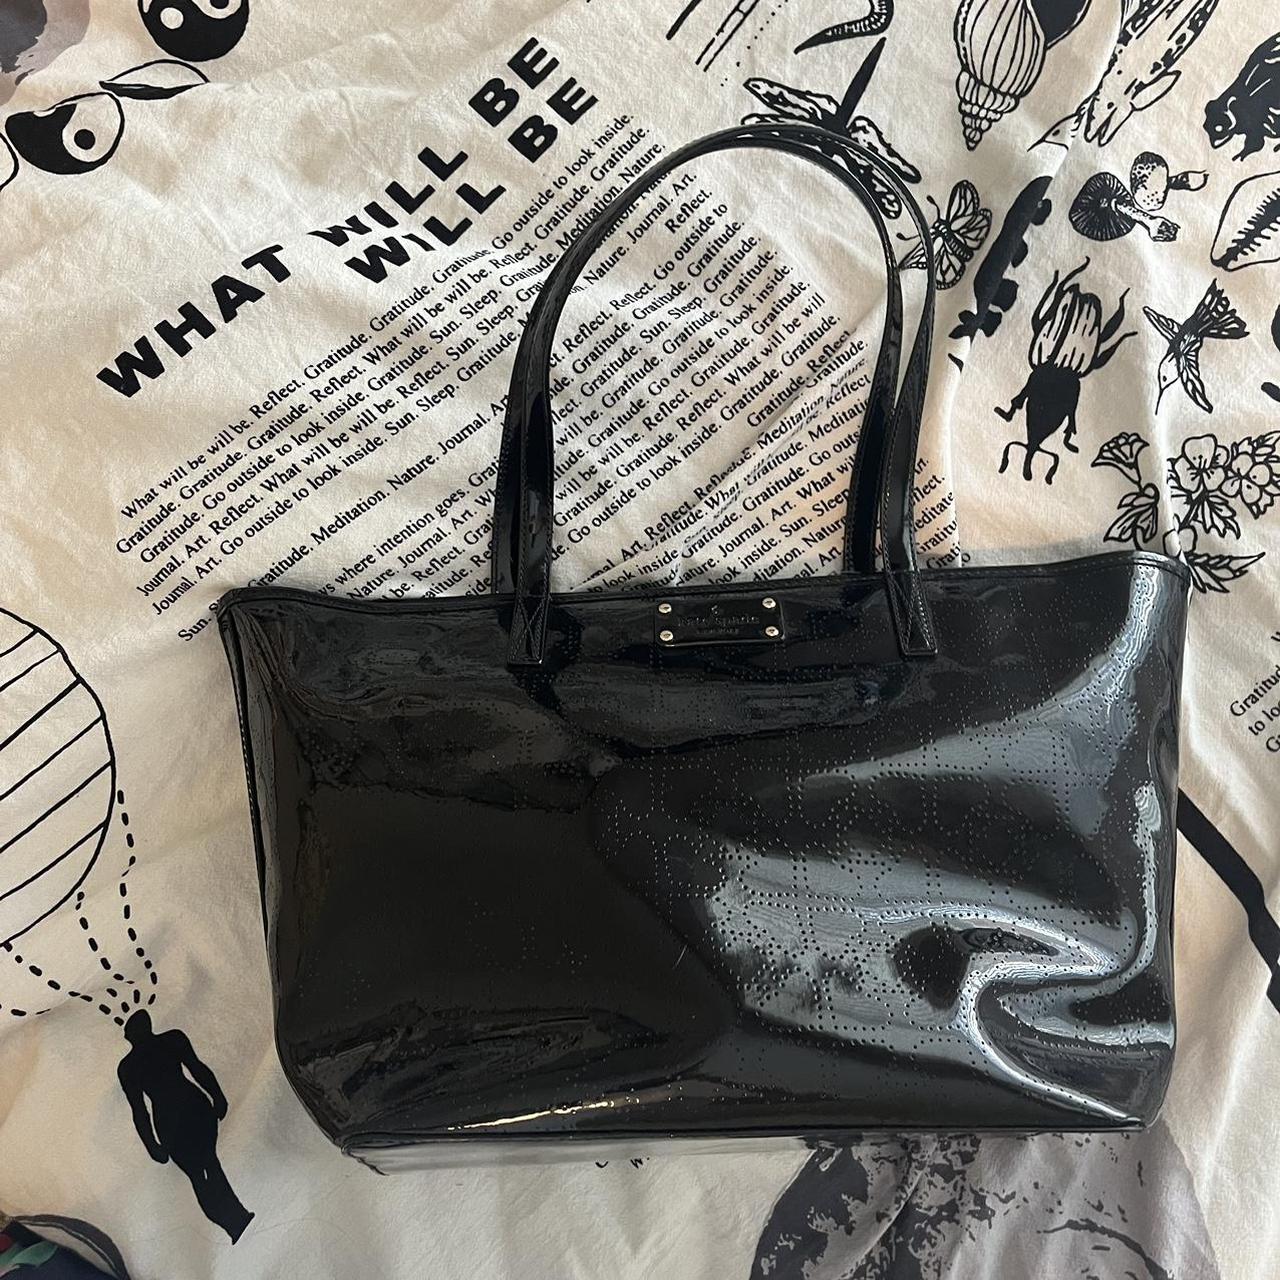 Kate Spade New York Women's Black Bag | Depop